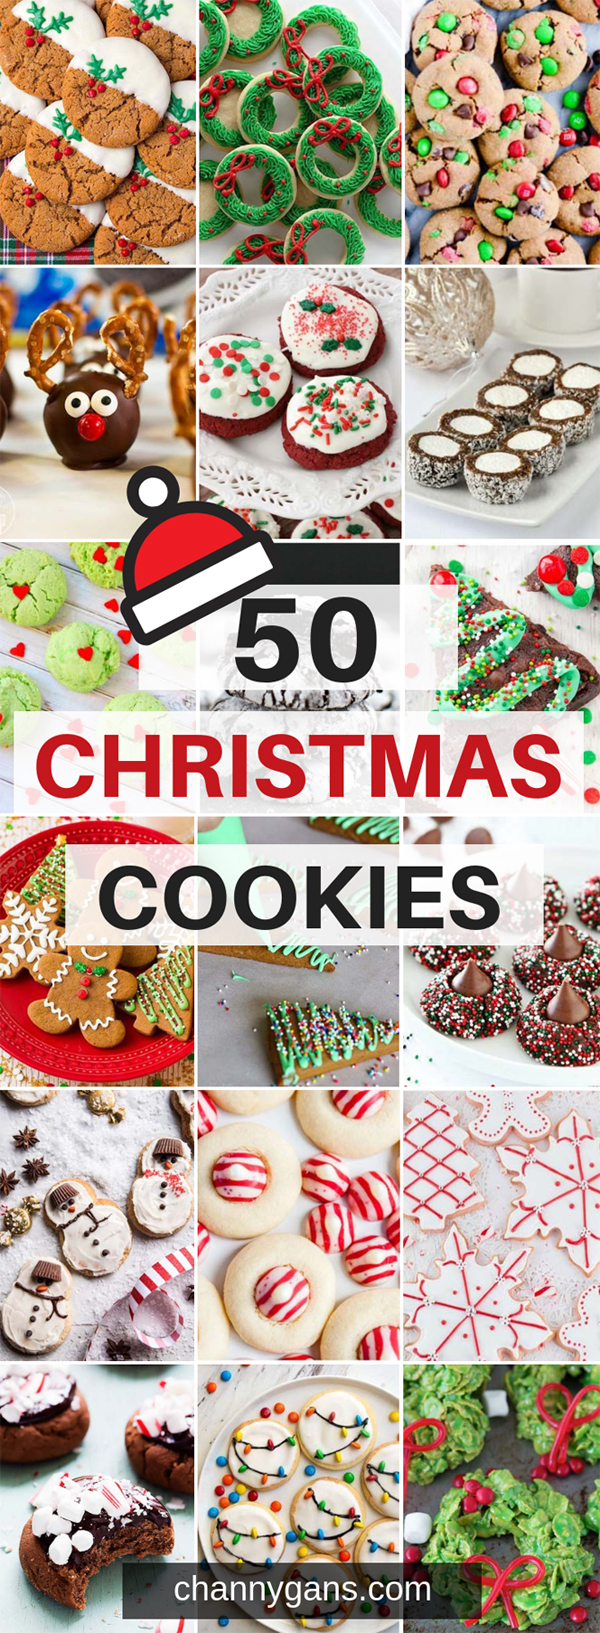 50 Christmas cookies